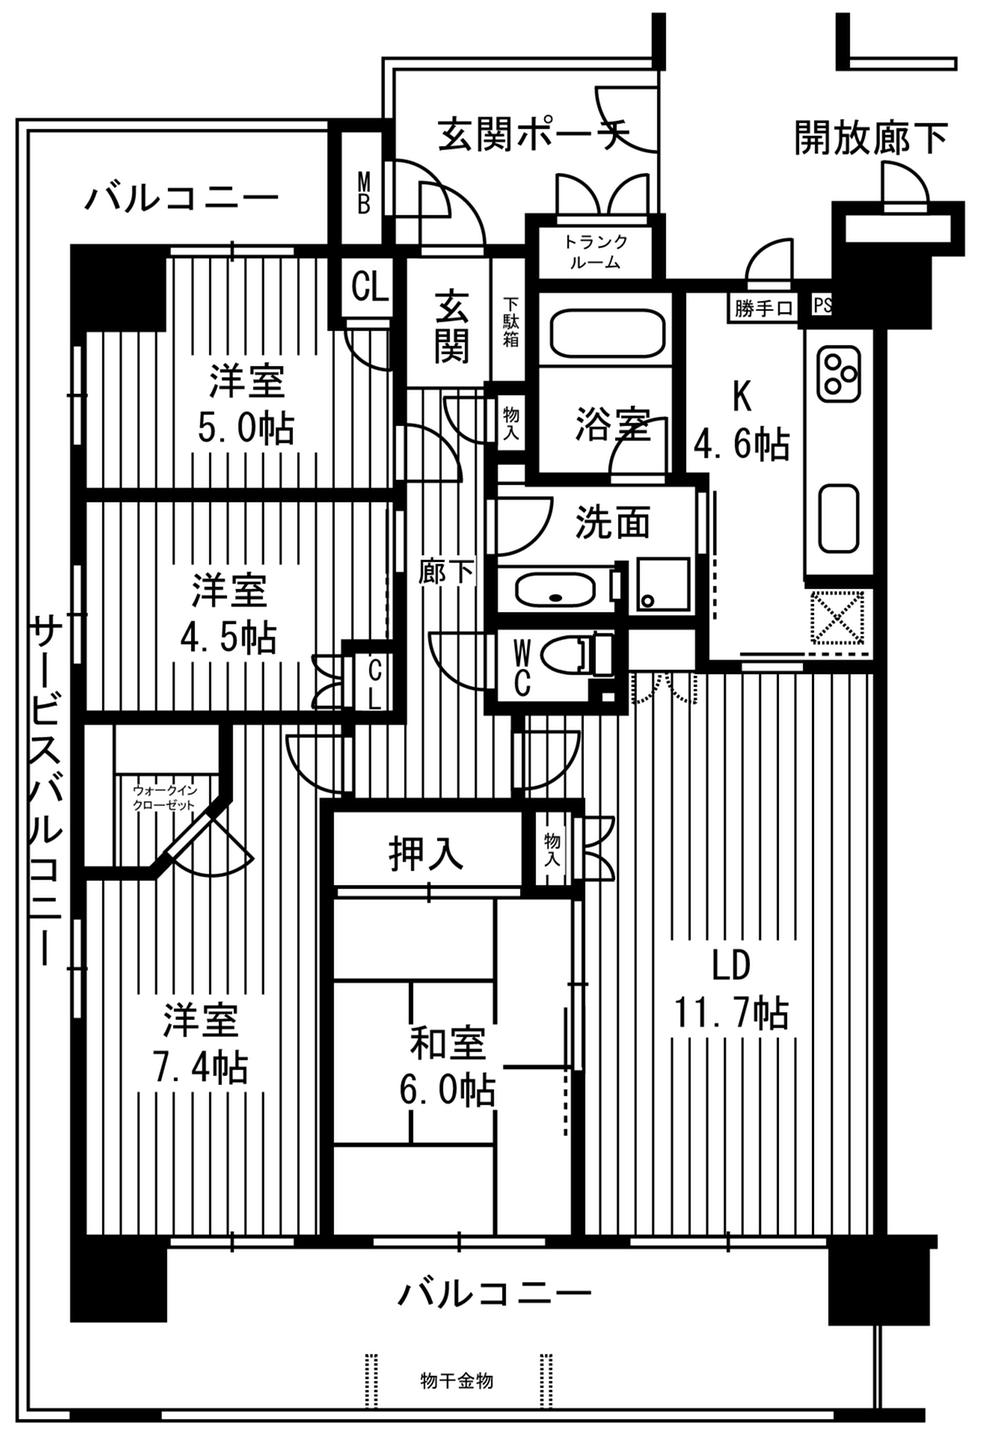 Floor plan. 4LDK, Price 20.8 million yen, Footprint 85.9 sq m , Balcony area 20.38 sq m